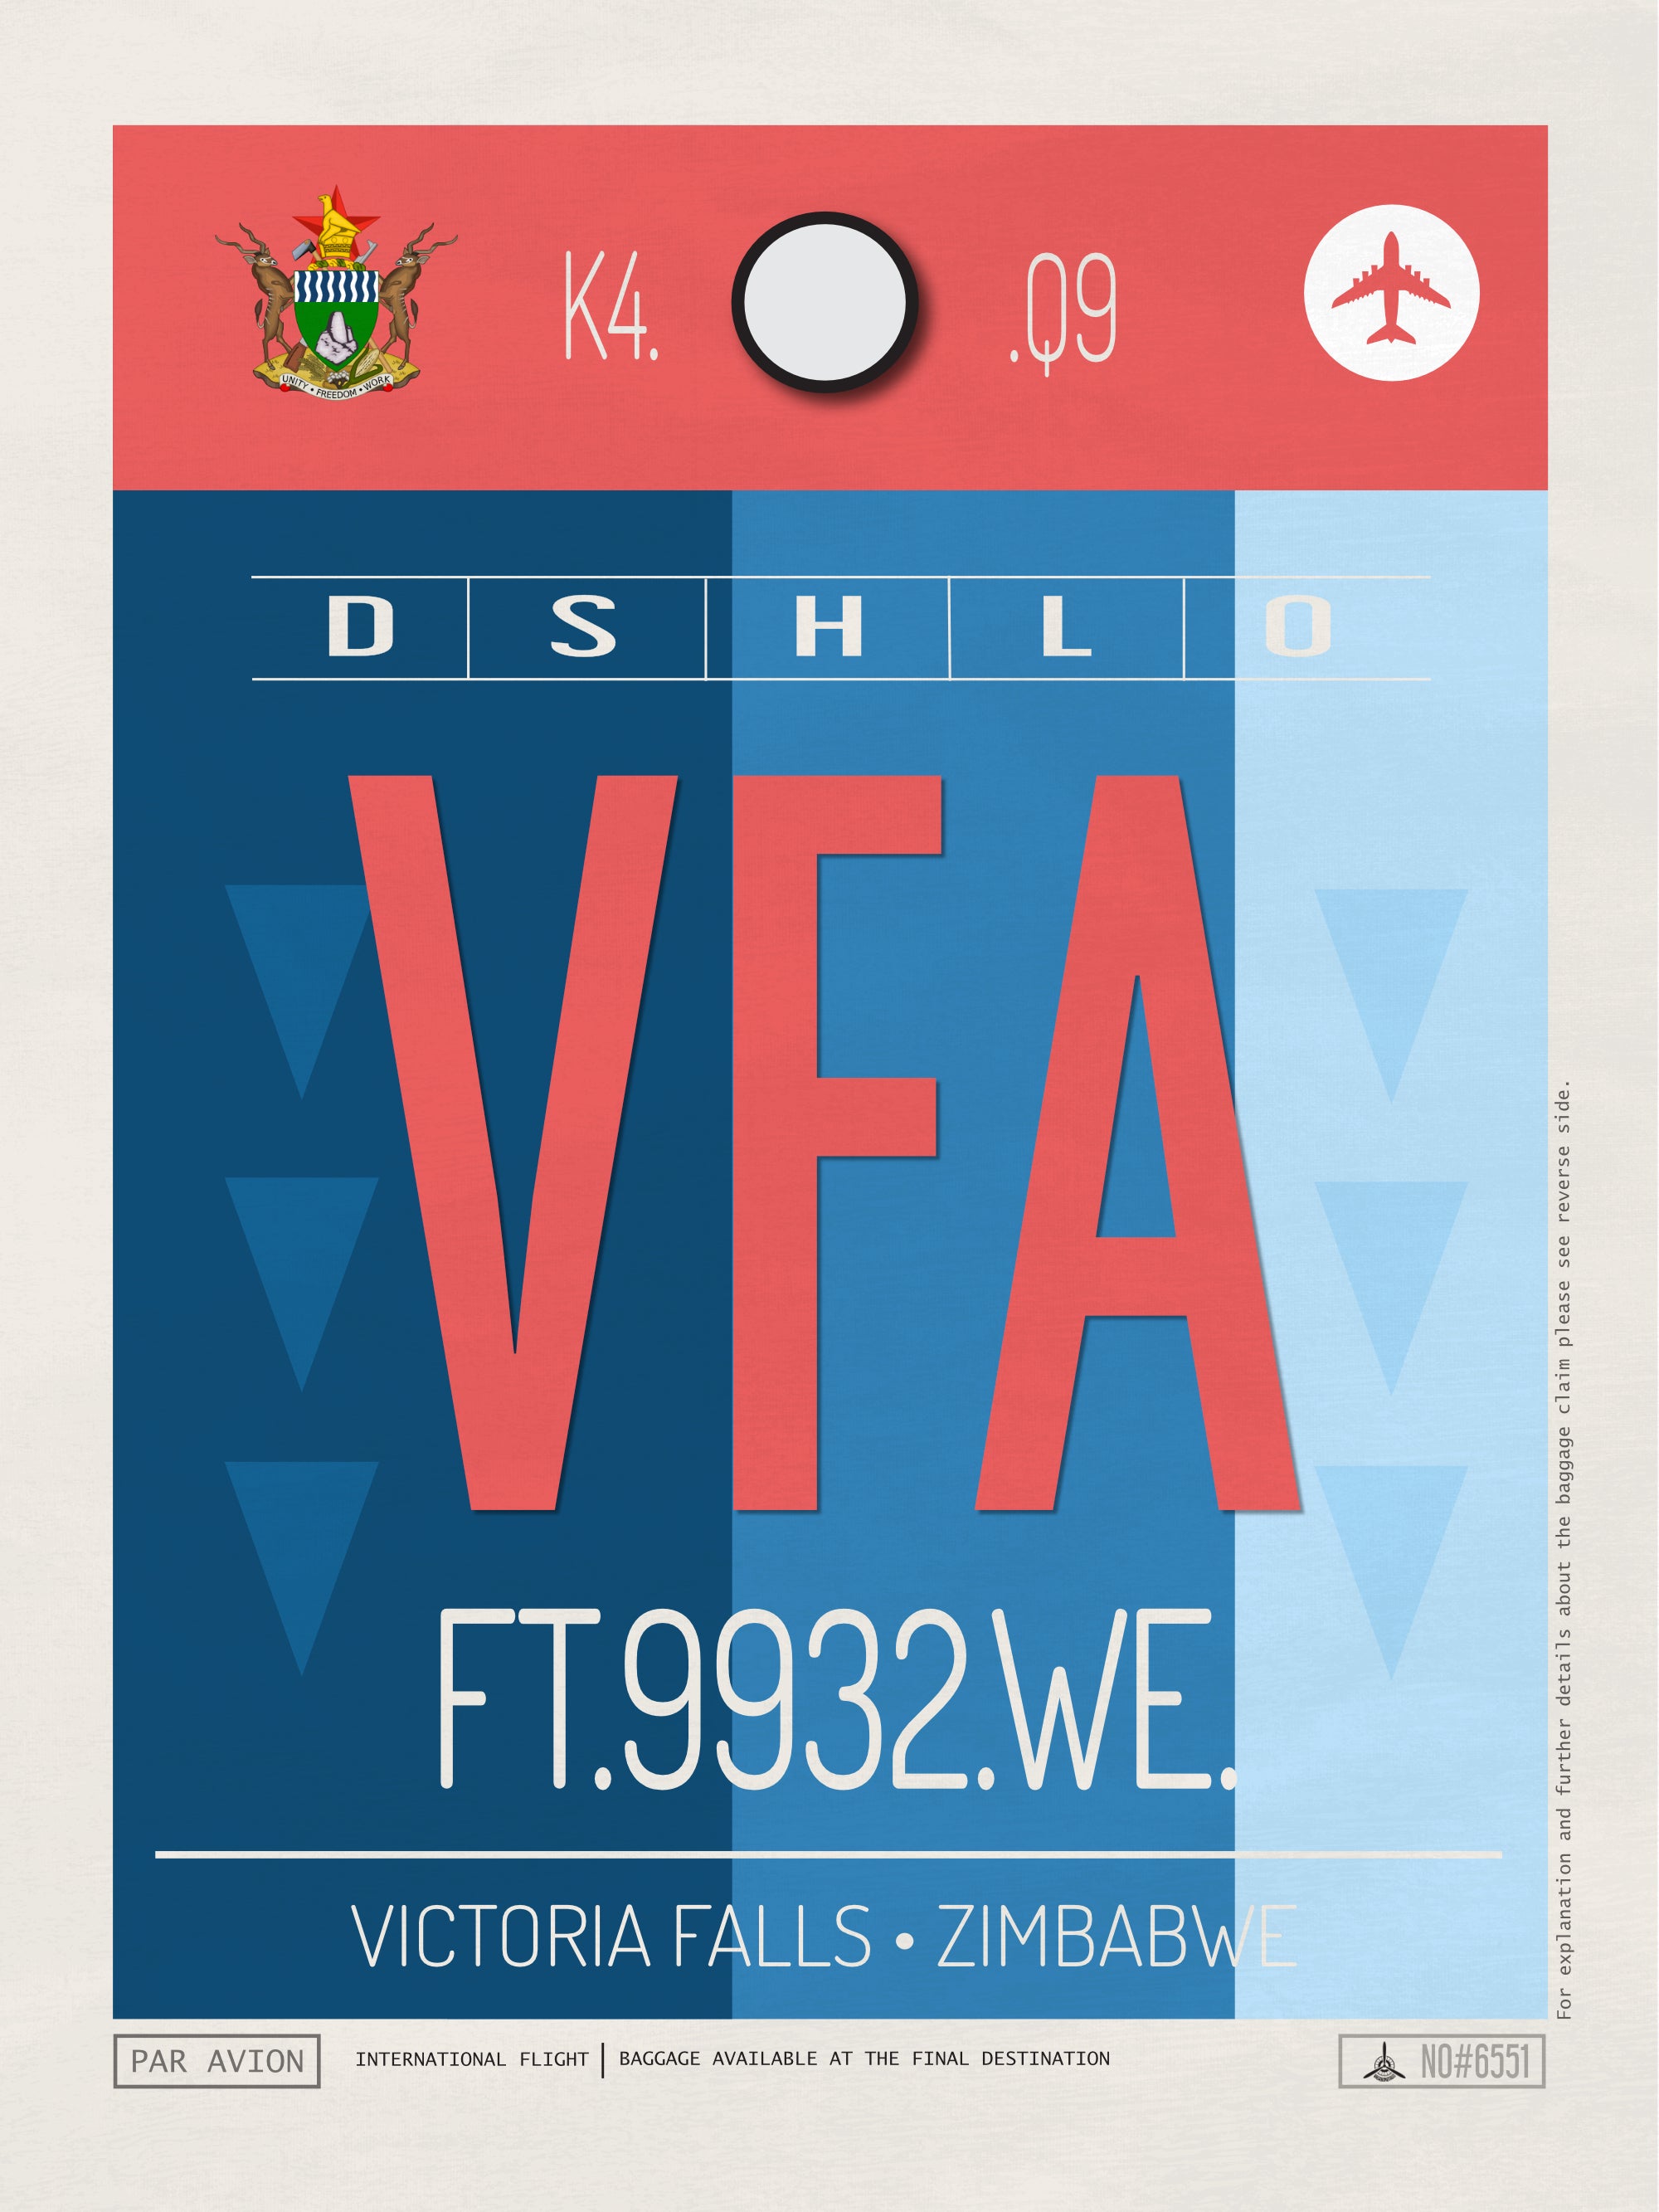 Victoria Falls, Zimbabwe - VFA Airport Code Poster